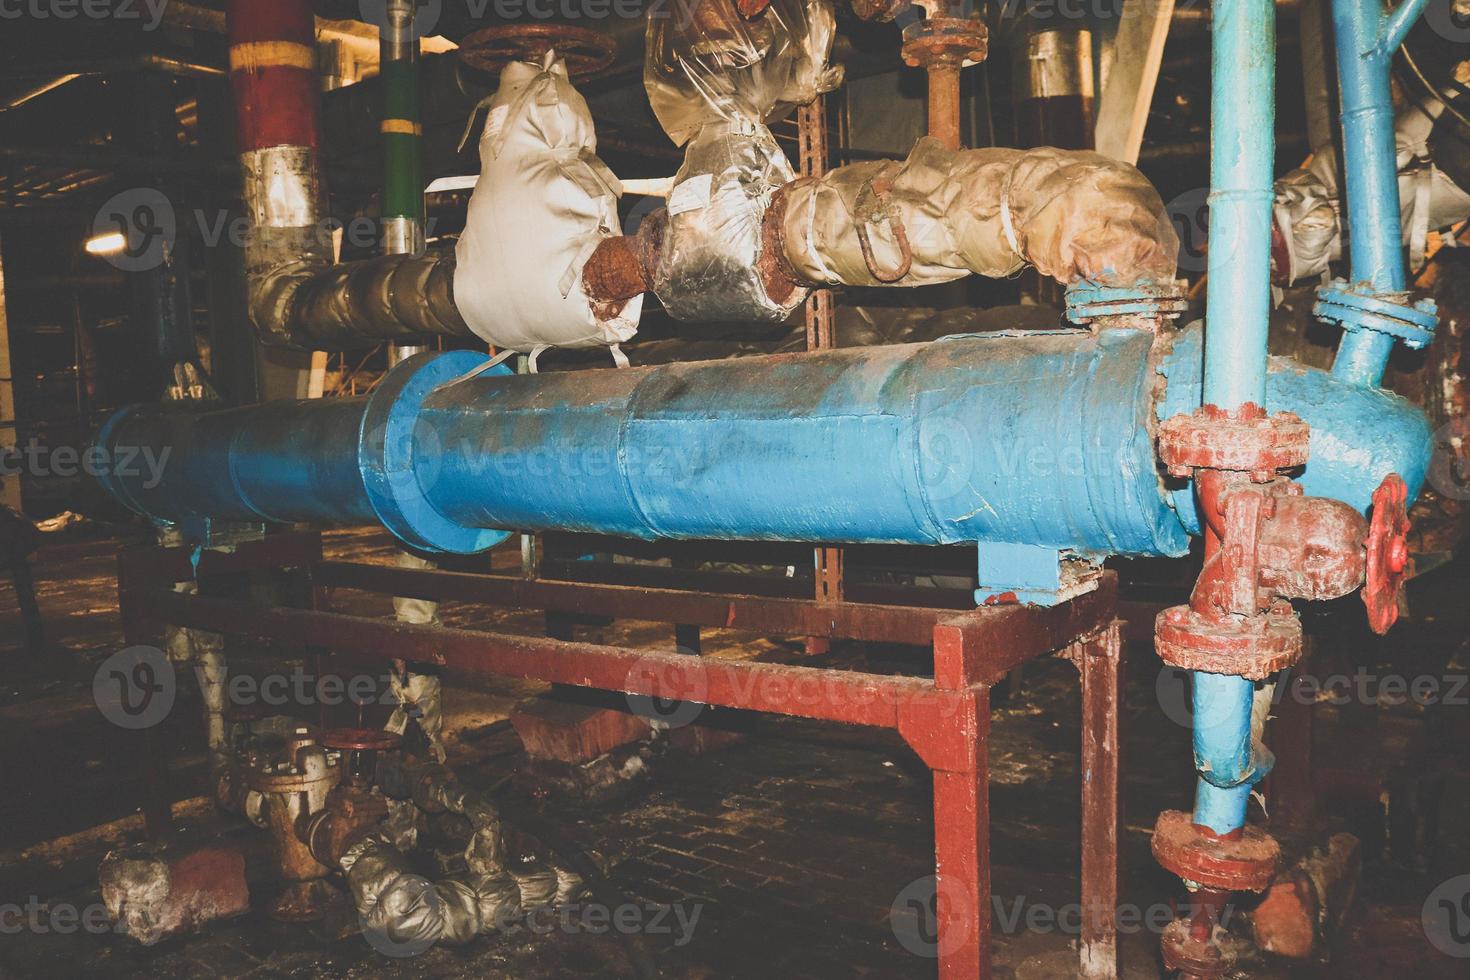 equipamento de energia de trocador de calor de casco e tubo de ferro para resfriamento de produtos de aquecimento na oficina de planta petroquímica química de refinaria industrial foto